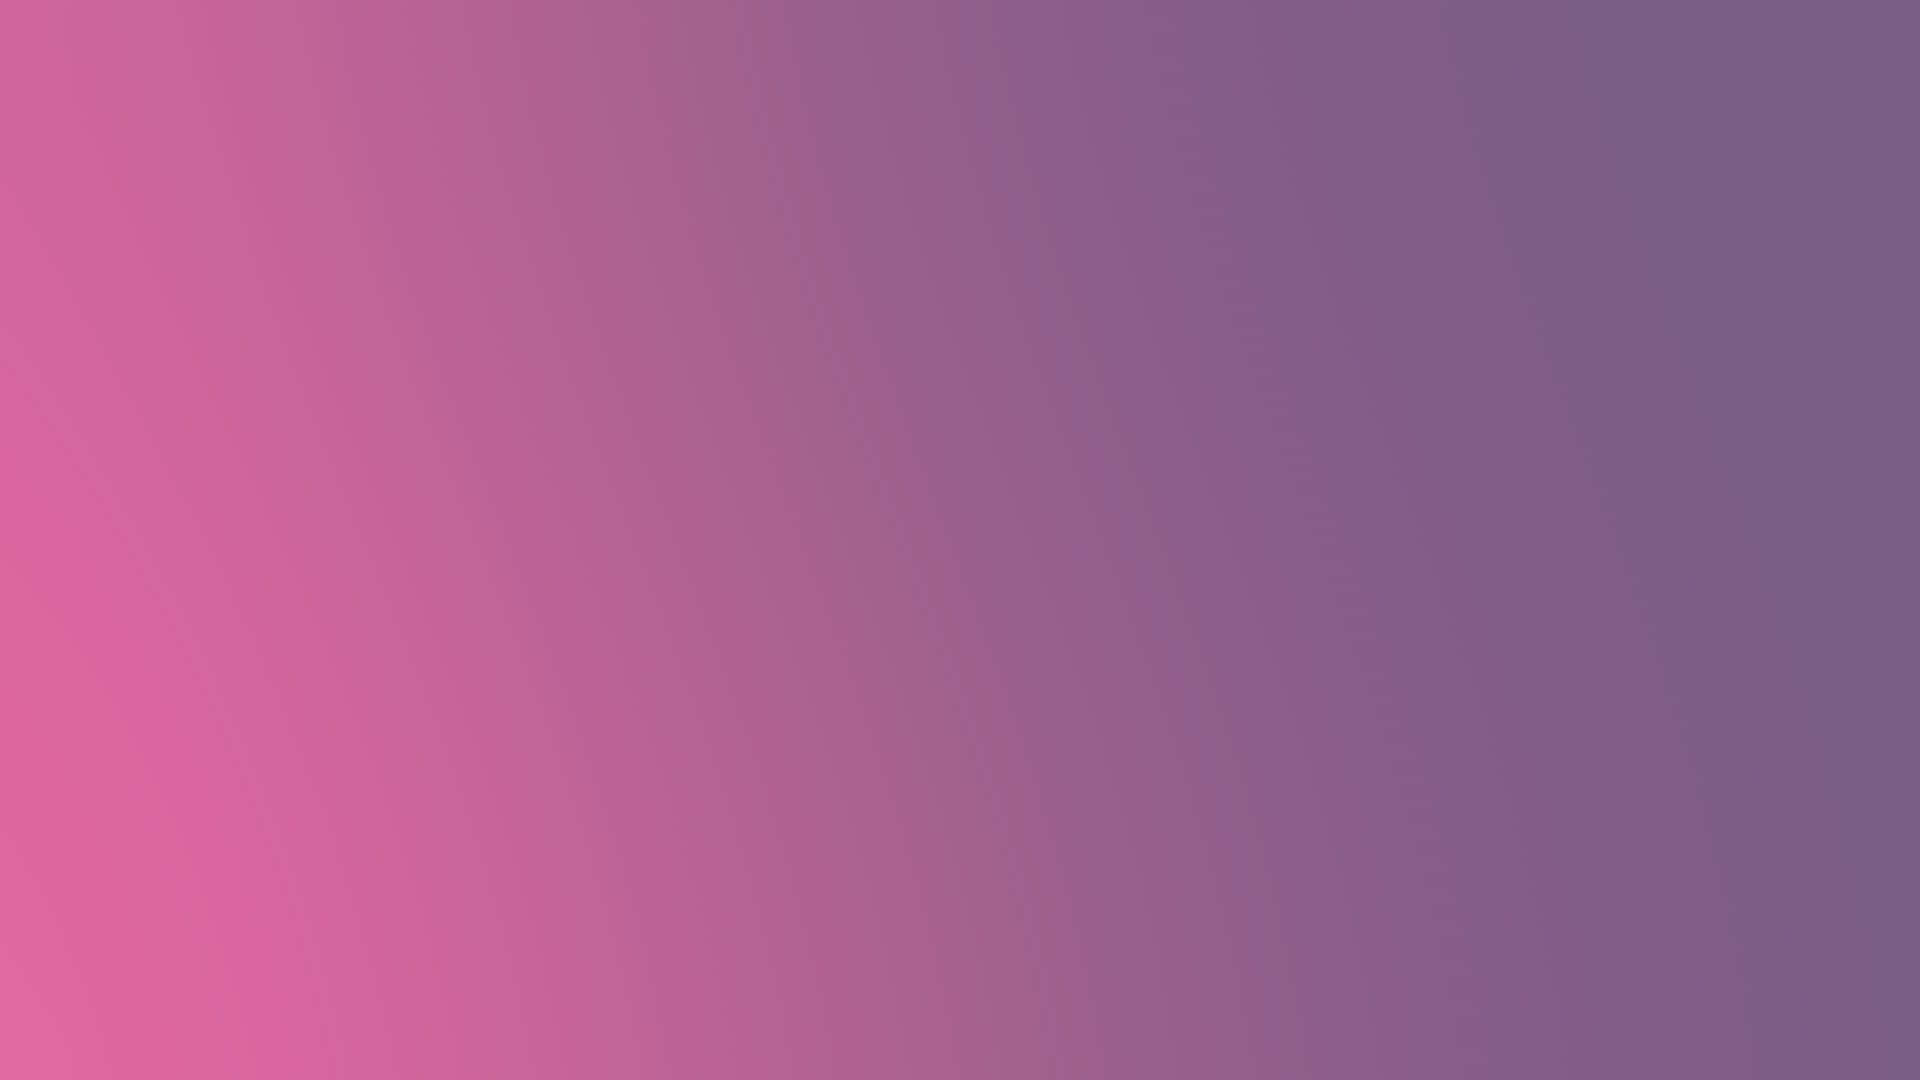 Plain Pink Desktop 1920 X 1080 Wallpaper